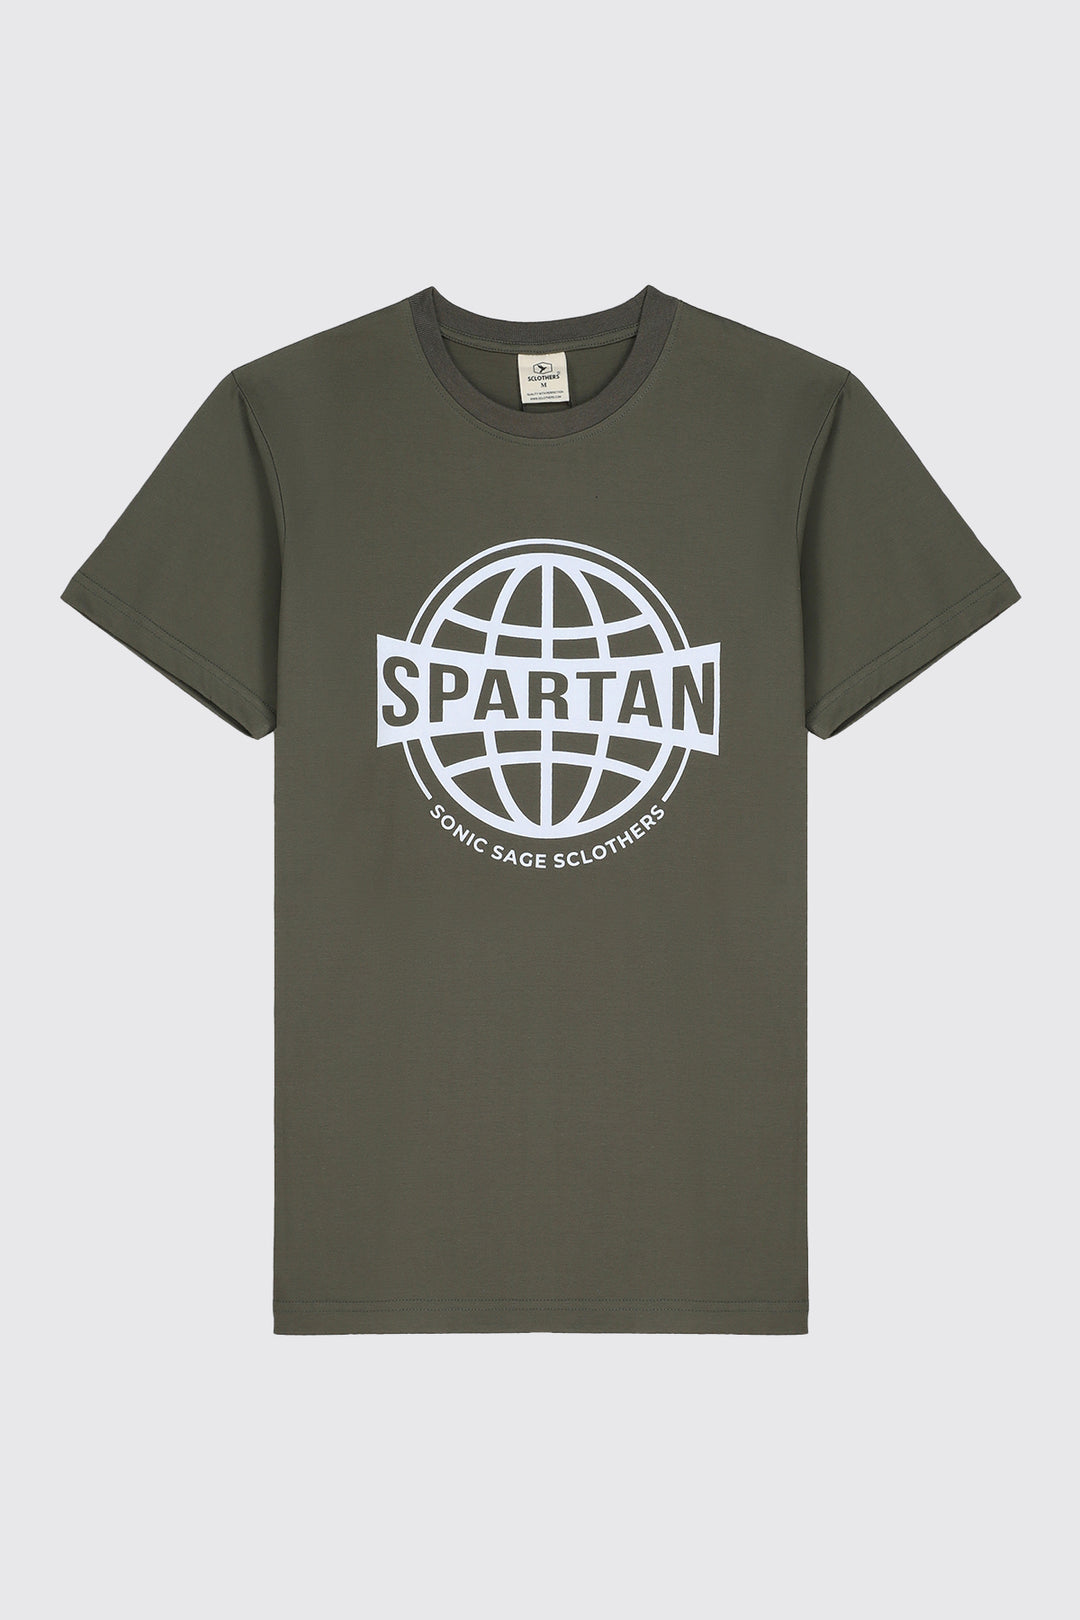 Basic Green Spartan Graphic T-Shirt - S23 - MT0308R